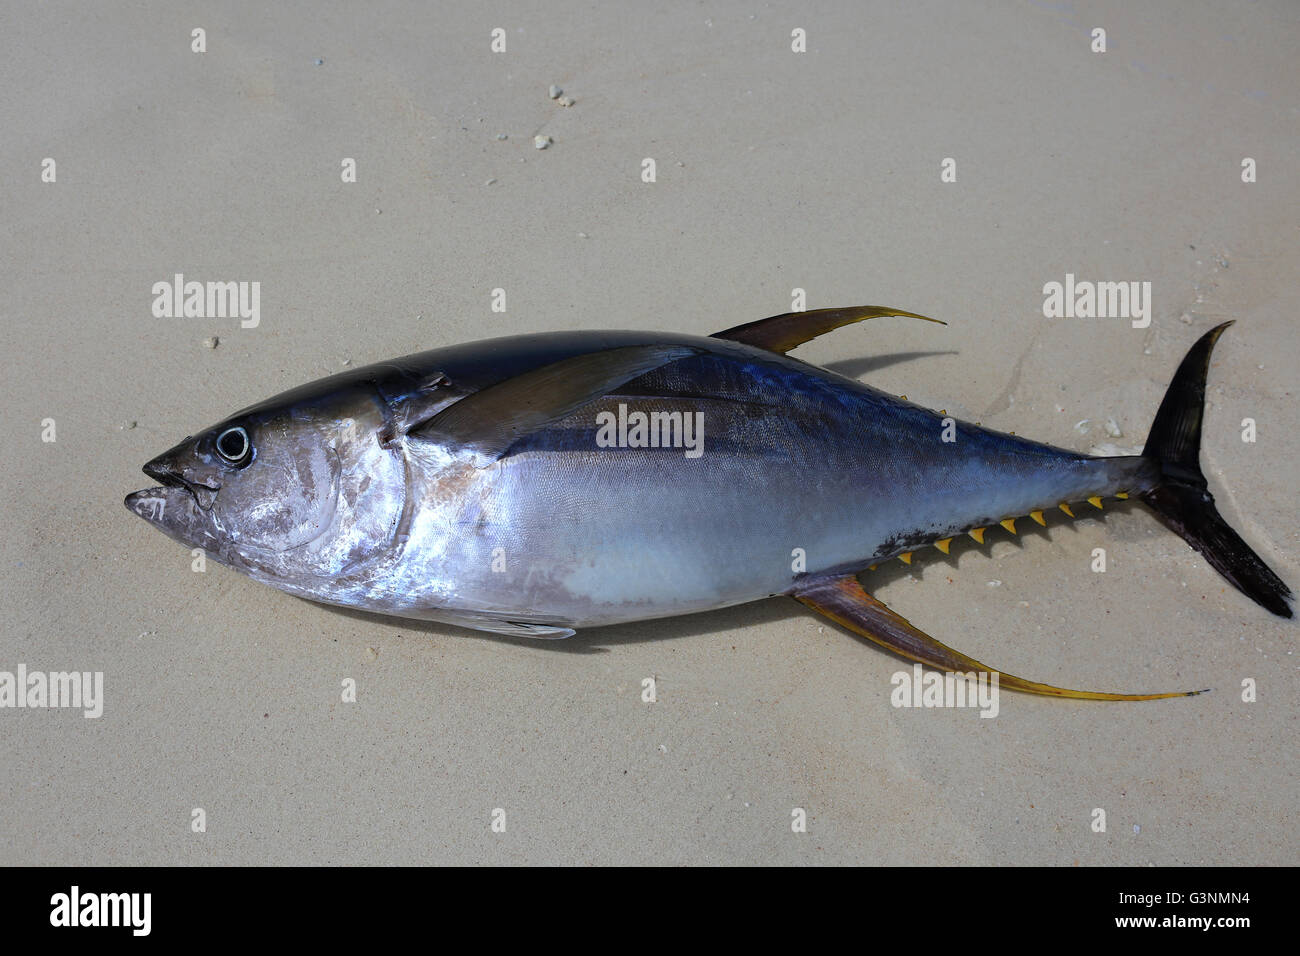 Fresco pescado atún pescado en una playa, la Isla de Navidad, Kiribati Foto de stock